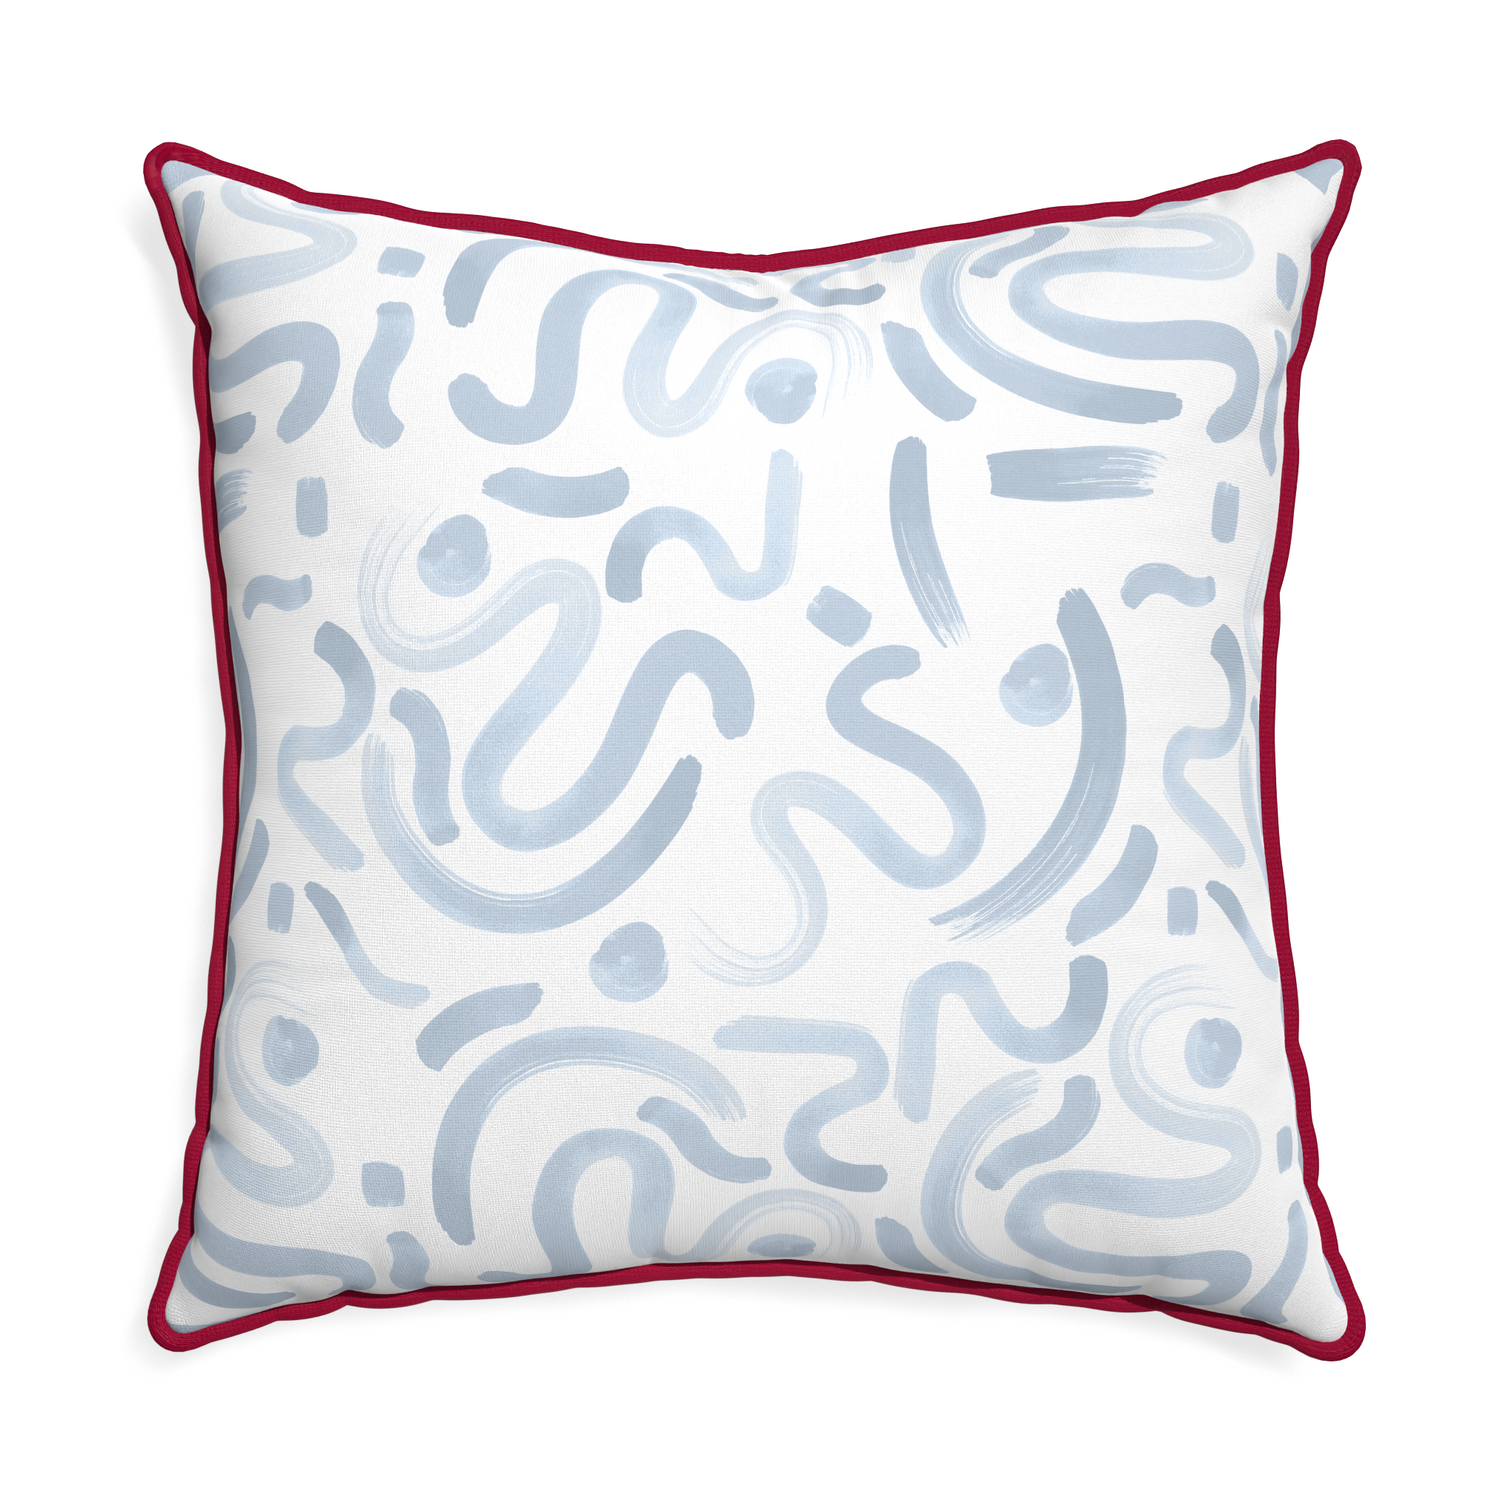 Euro-sham hockney sky custom pillow with raspberry piping on white background